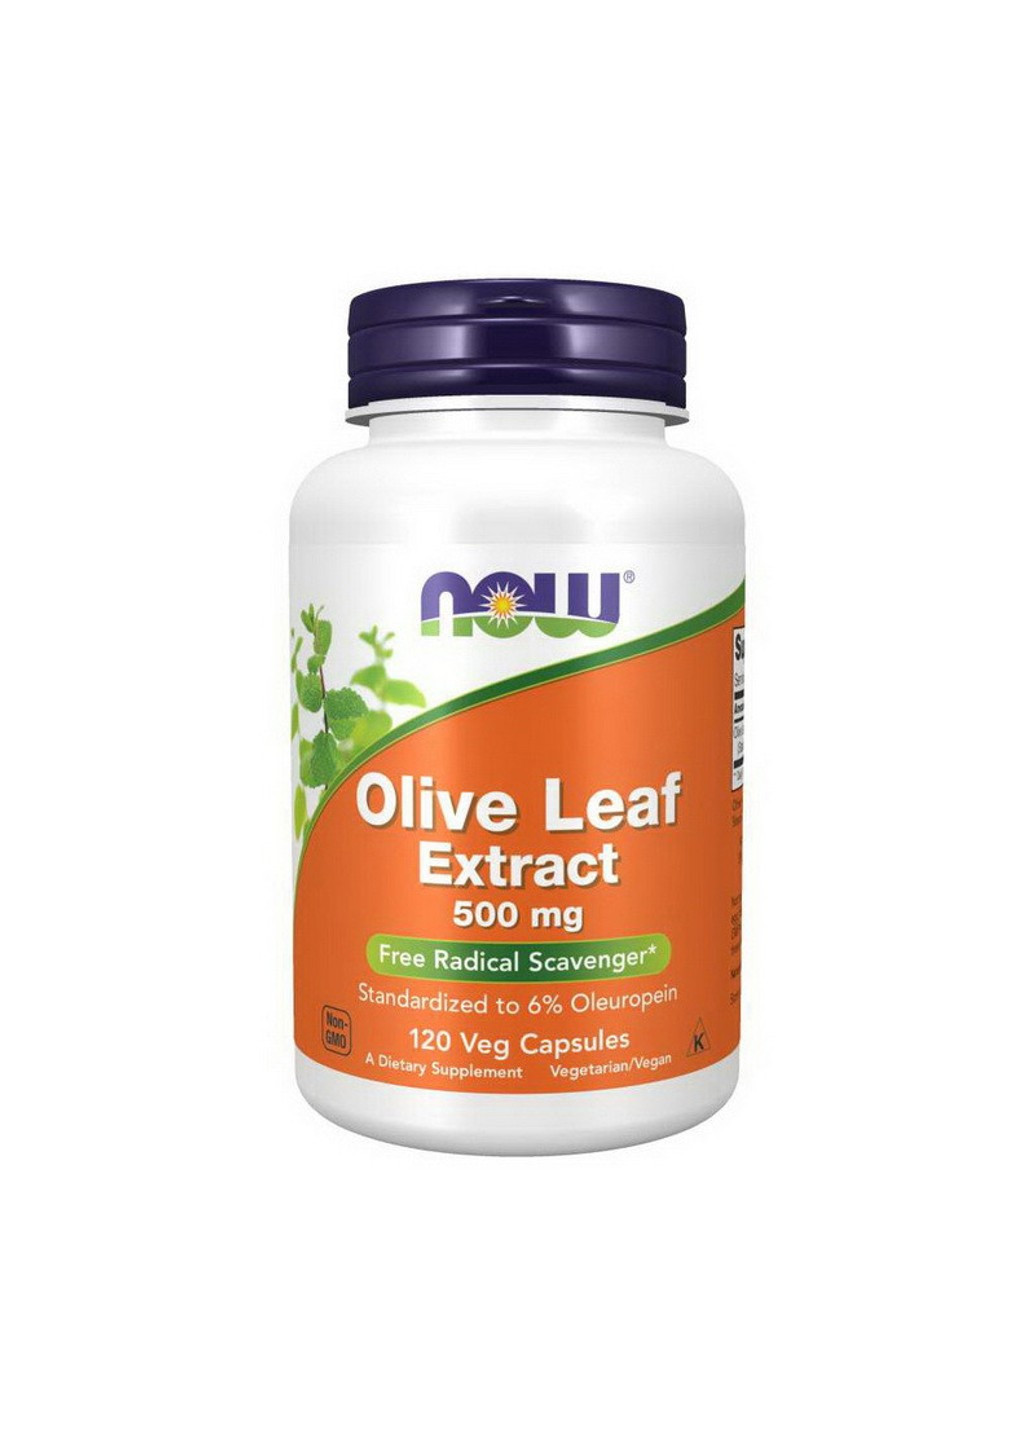 Экстракт из листьев оливкового дерева Olive Leaf Extract 500 mg (120 капс) нау фудс Now Foods (255410459)